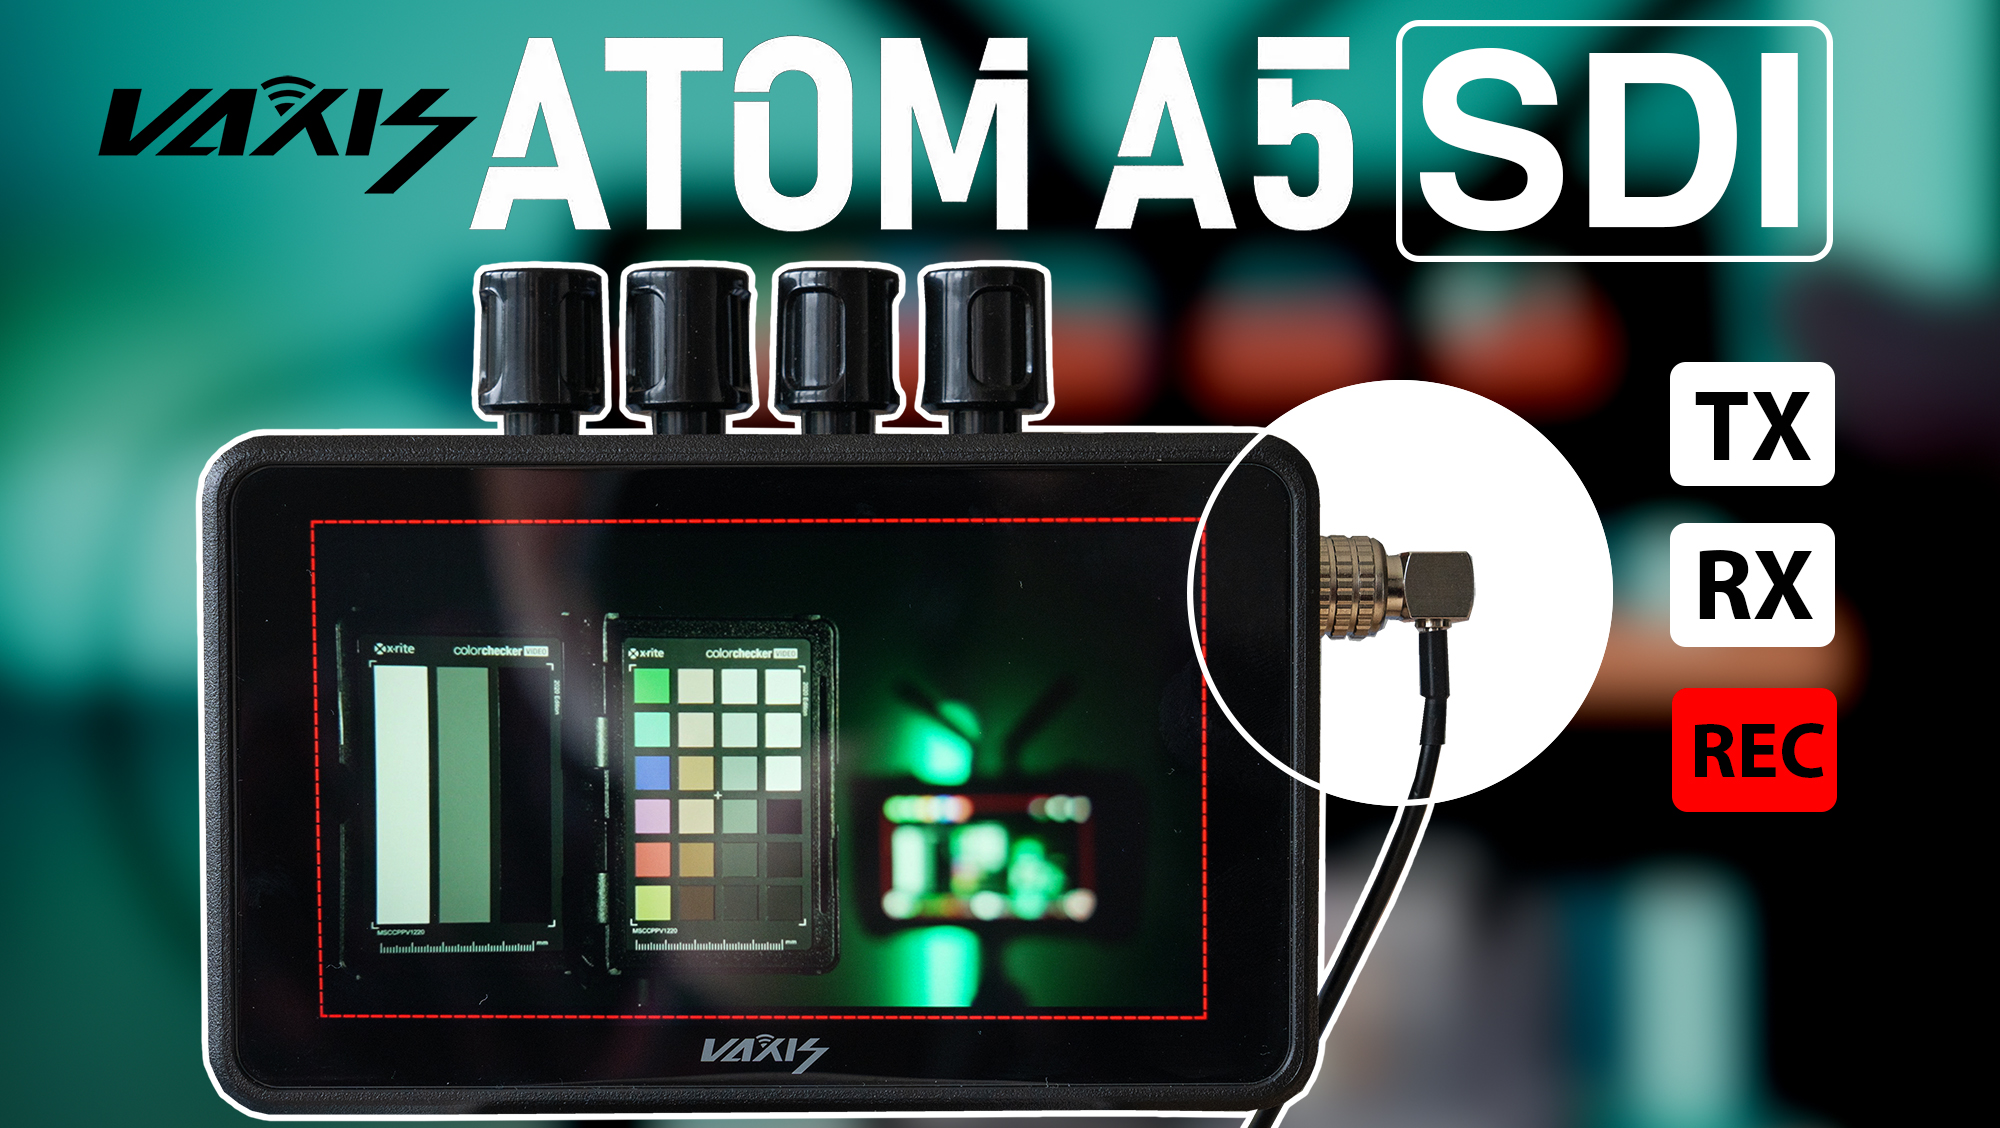 Vaxis Atom A5 SDI Review - An SDI & HDMI  Monitor that Transmits & Records Video